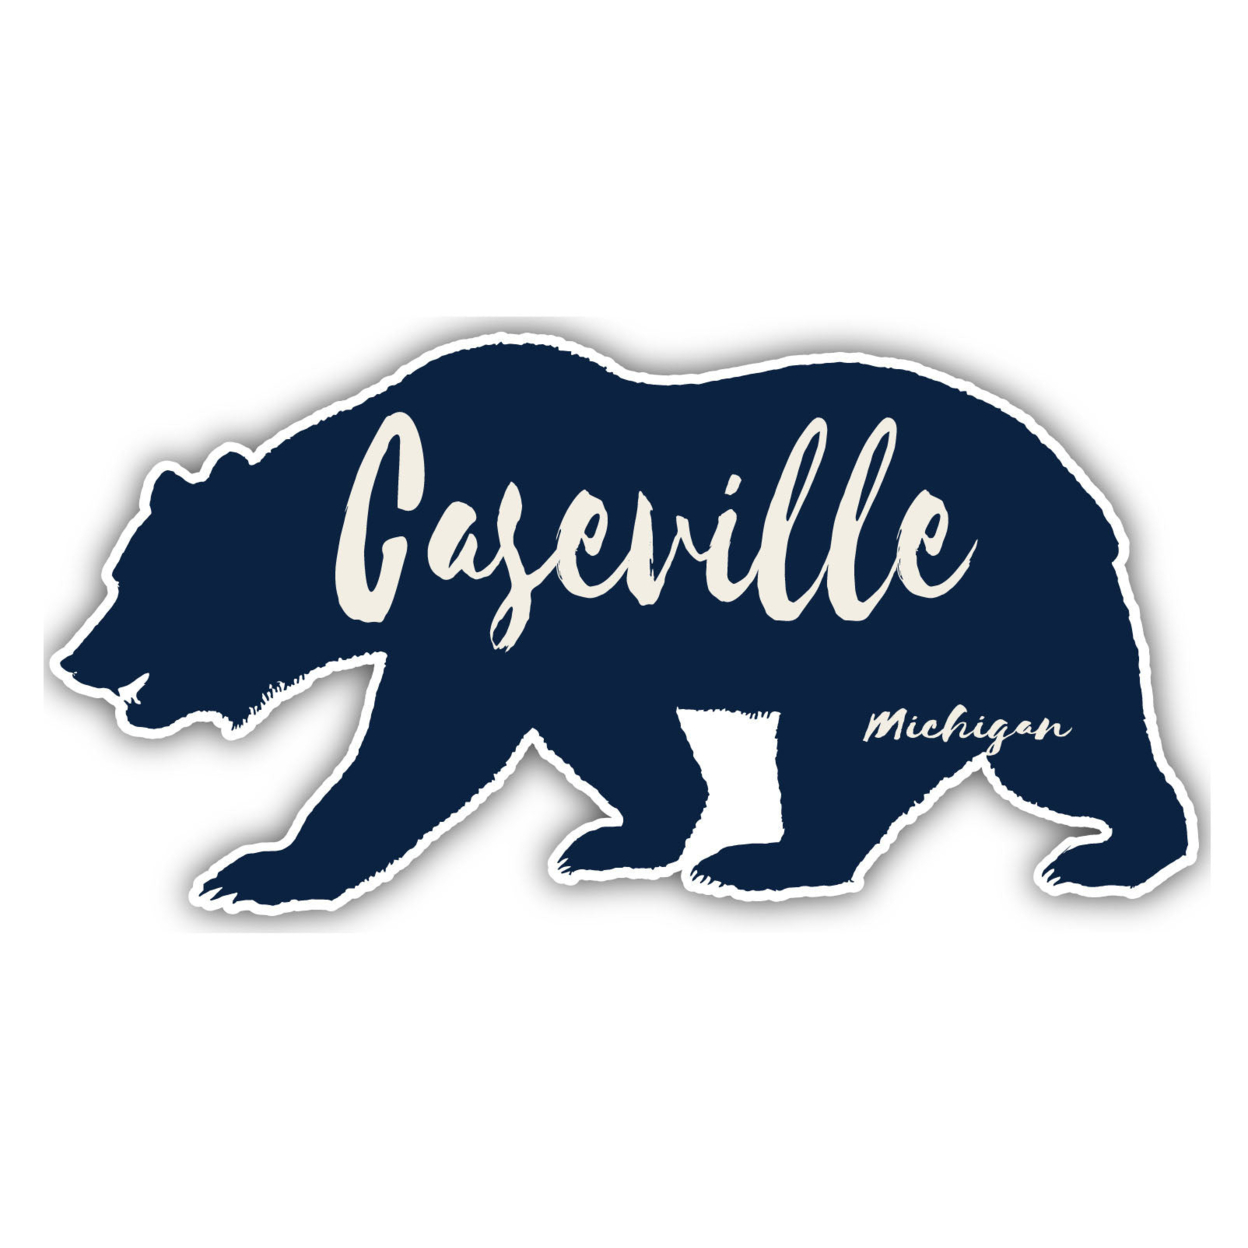 Caseville Michigan Souvenir Decorative Stickers (Choose Theme And Size) - Single Unit, 8-Inch, Bear